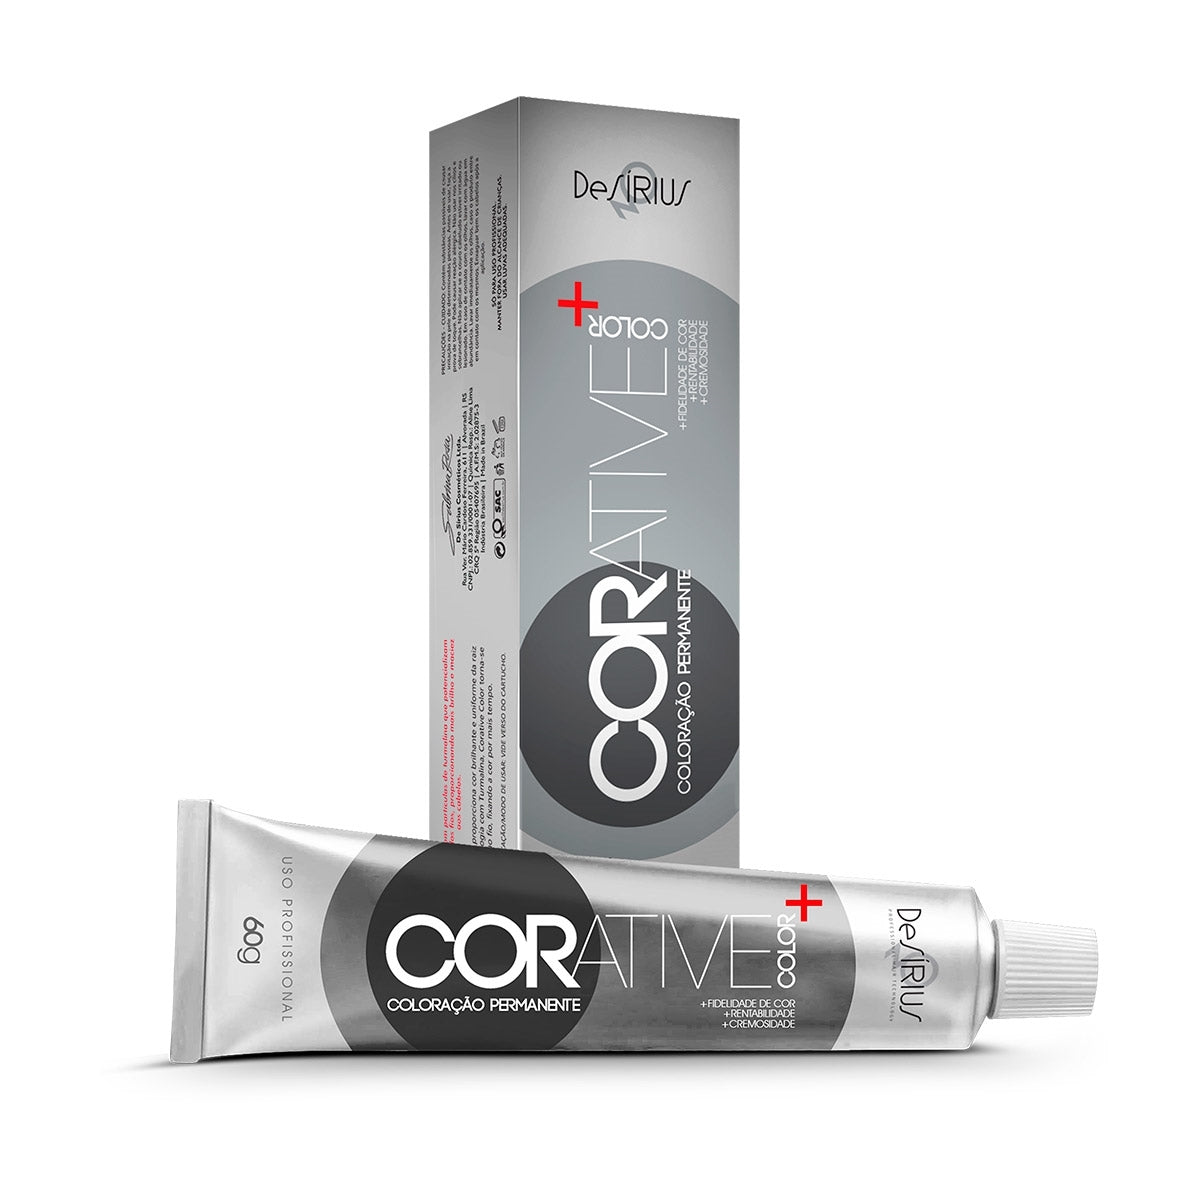 CORATIVE COLORATION - 9.00 INTENSE EXTRA LIGHT BLOND - 60G FS Cosmetics